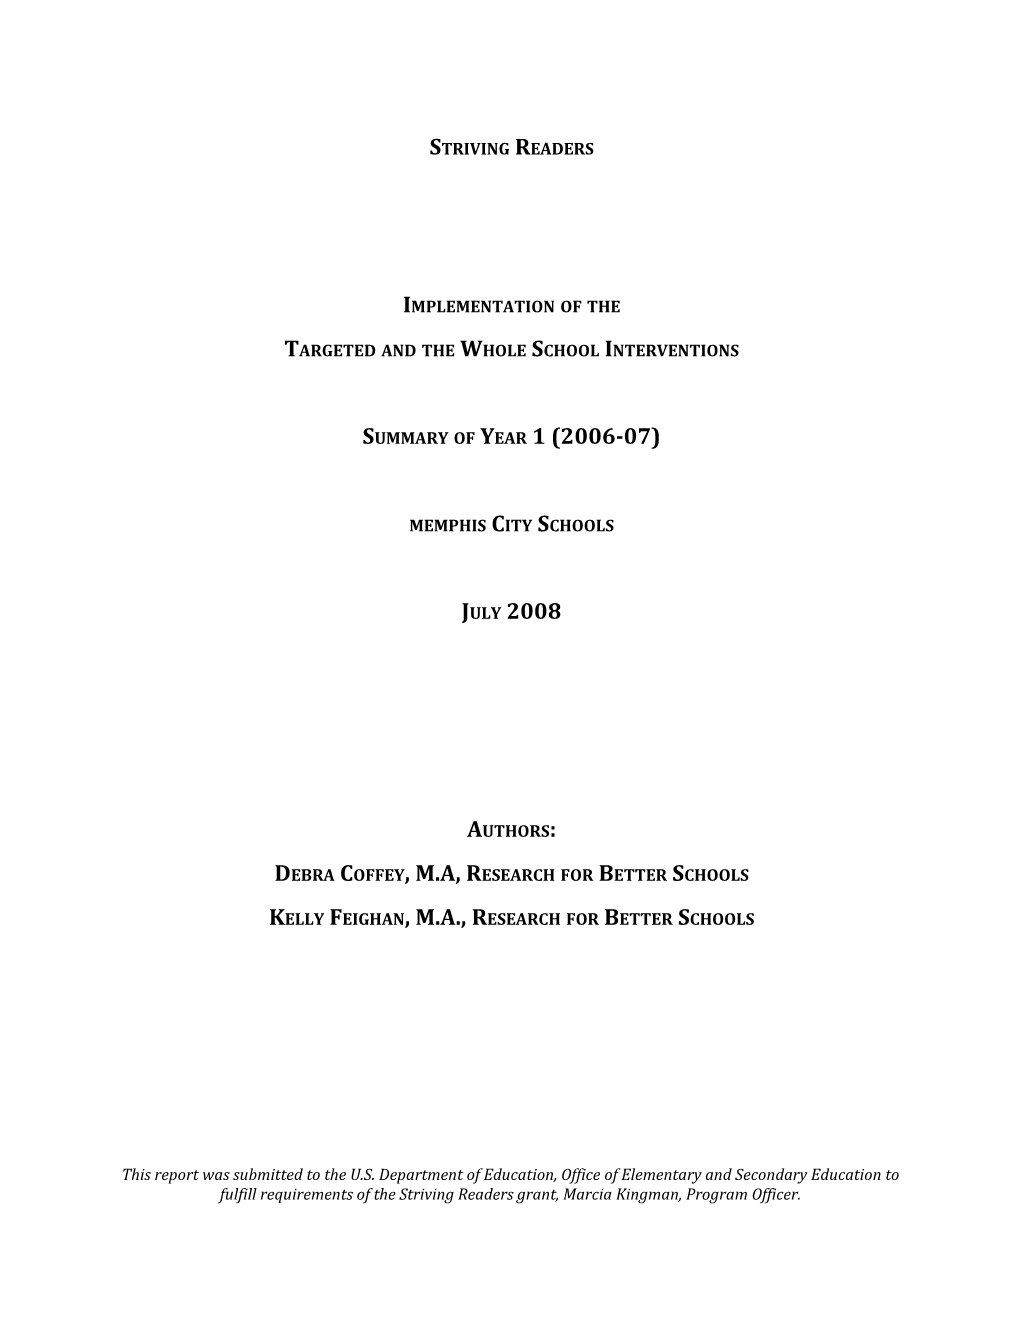 Striving Readers Implementation Study 2006-2007: Memphis City Schools (MS Word)